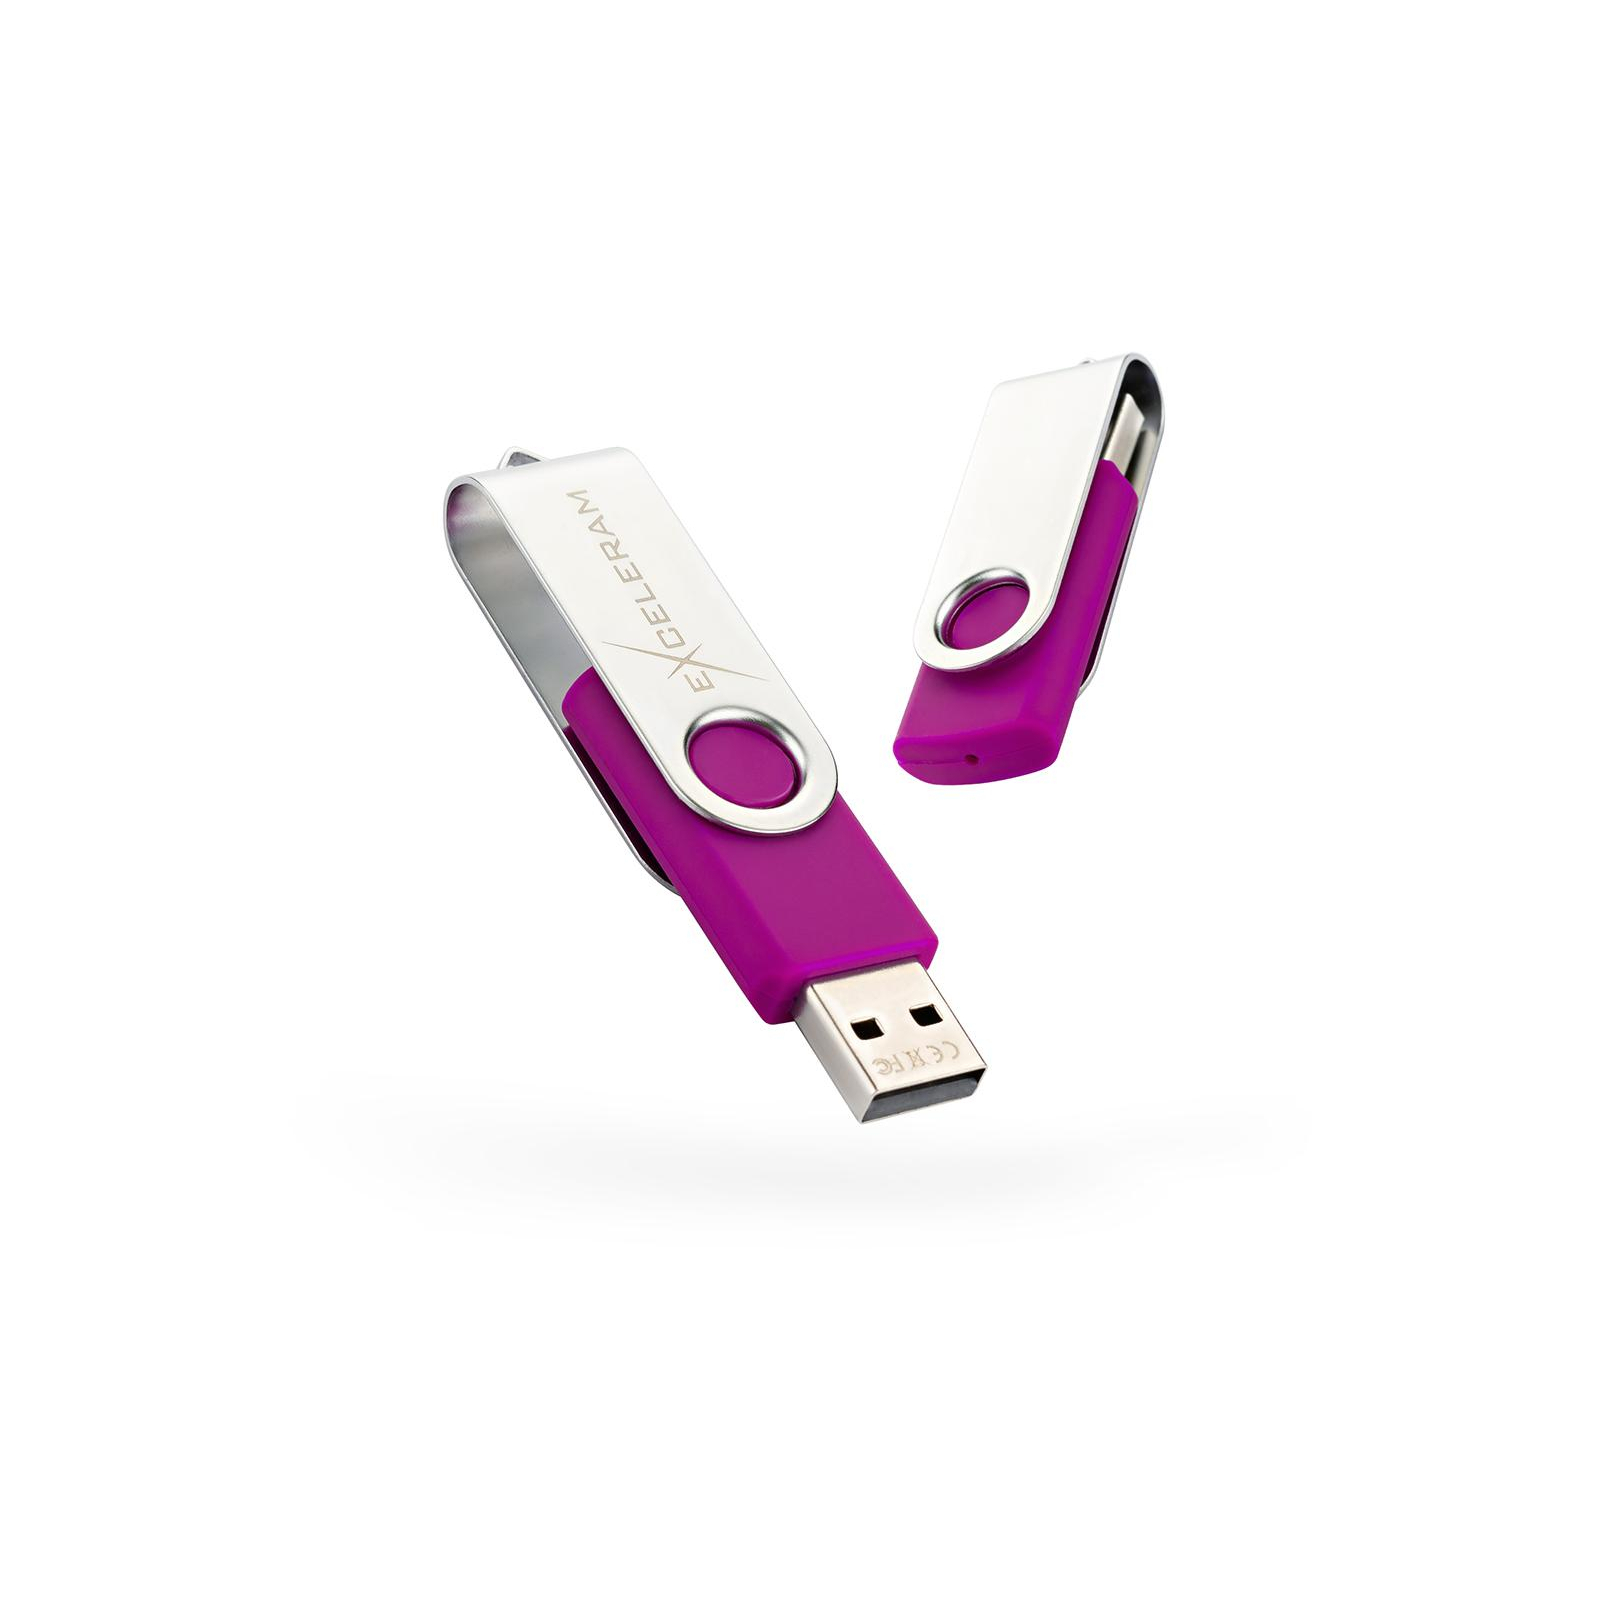 USB флеш накопитель eXceleram 16GB P1 Series Silver/Green USB 2.0 (EXP1U2SIGR16)